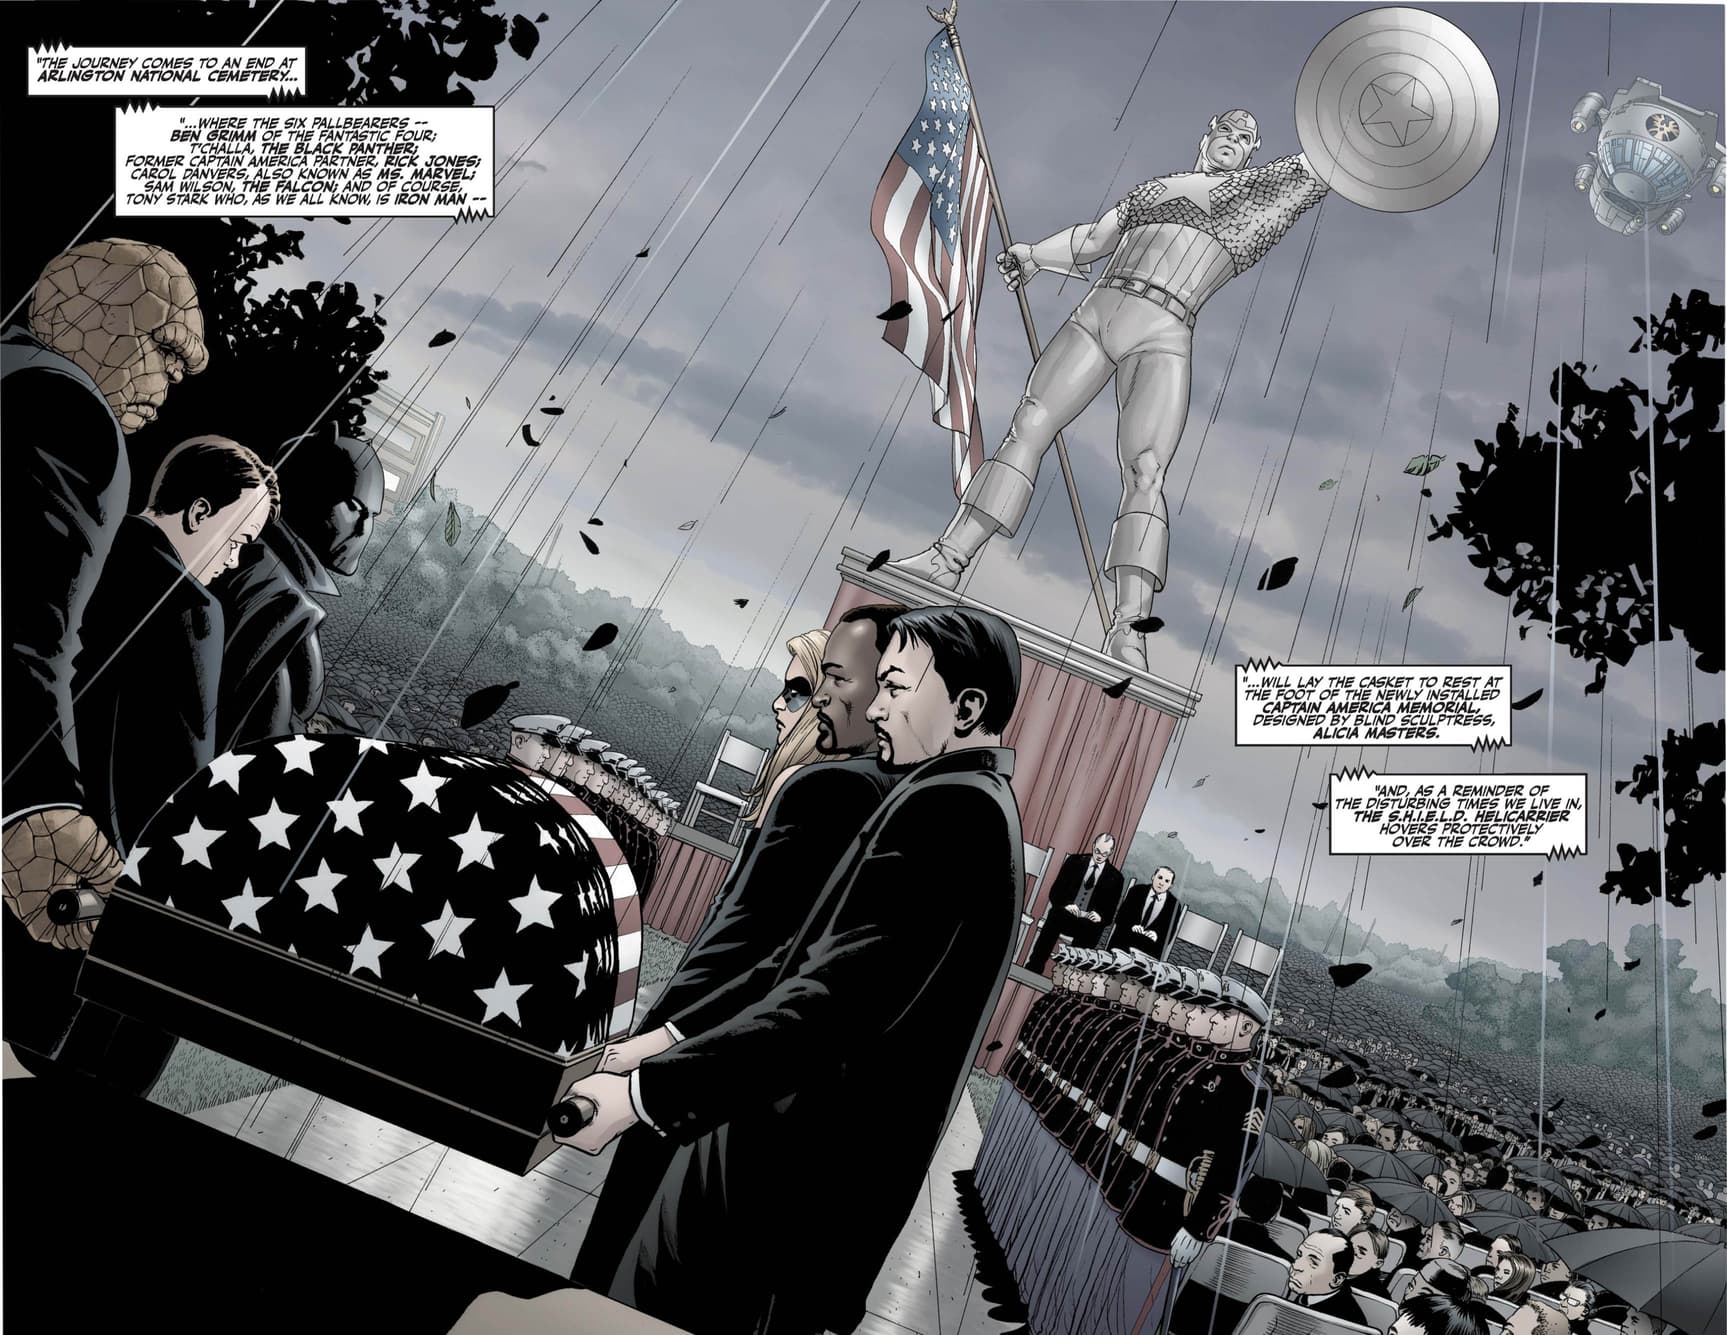 Captain America funeral